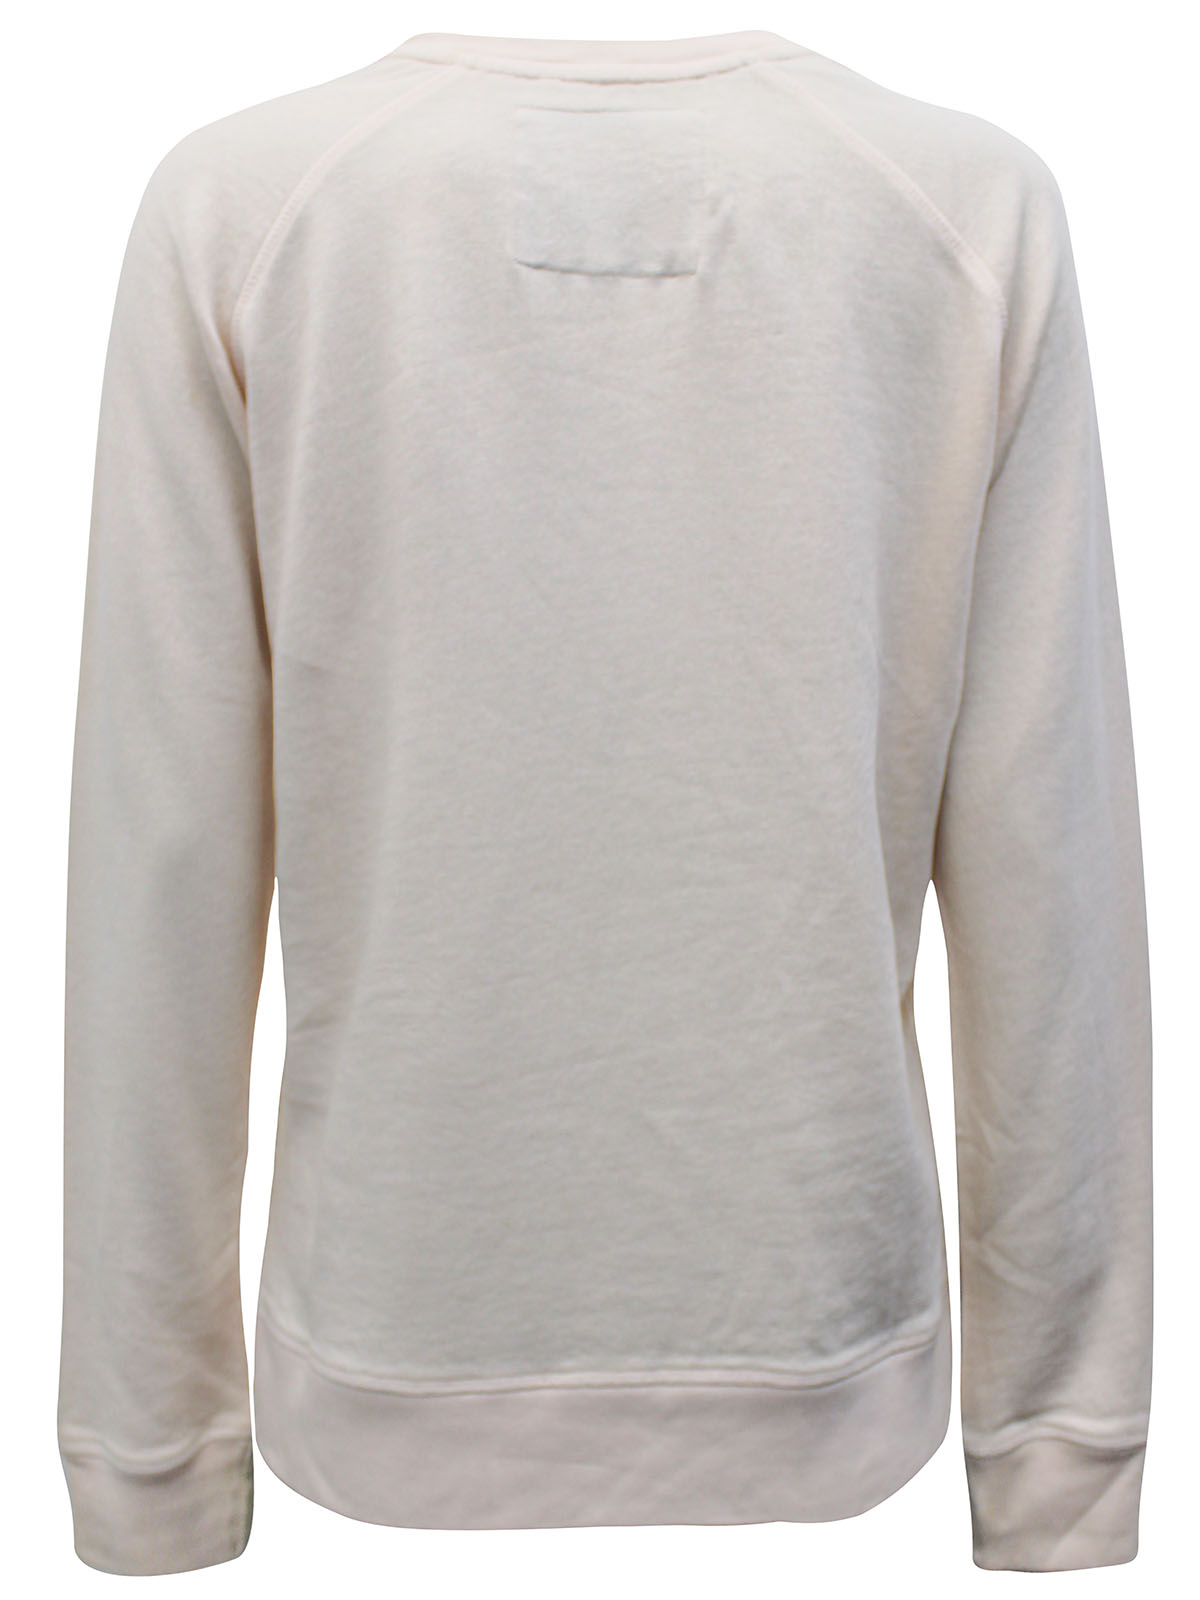 Crew Clothing - - Crew Clothing LIGHT-PEACH Pure Cotton Sweatshirt ...